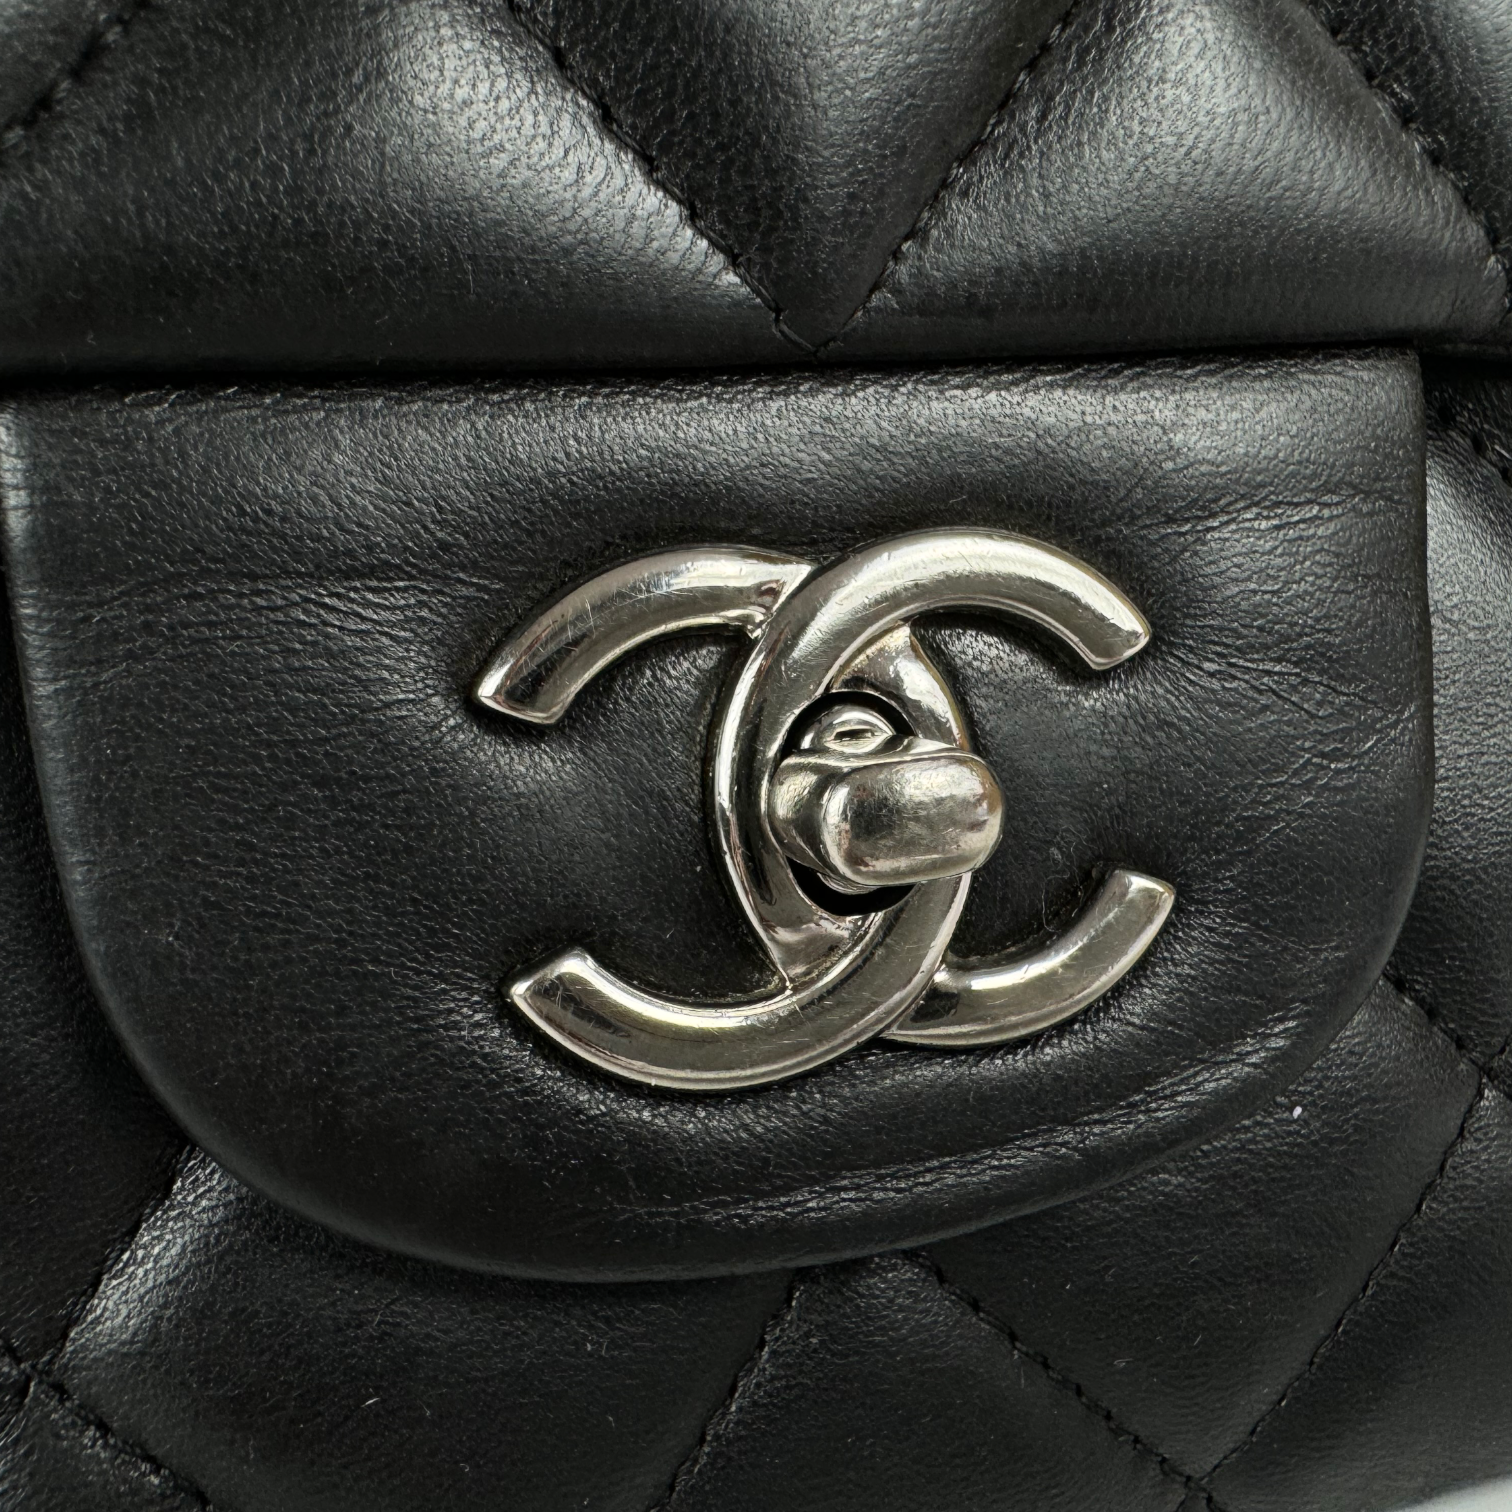 Chanel Classic Single Flap Jumbo Black Lambskin Silver